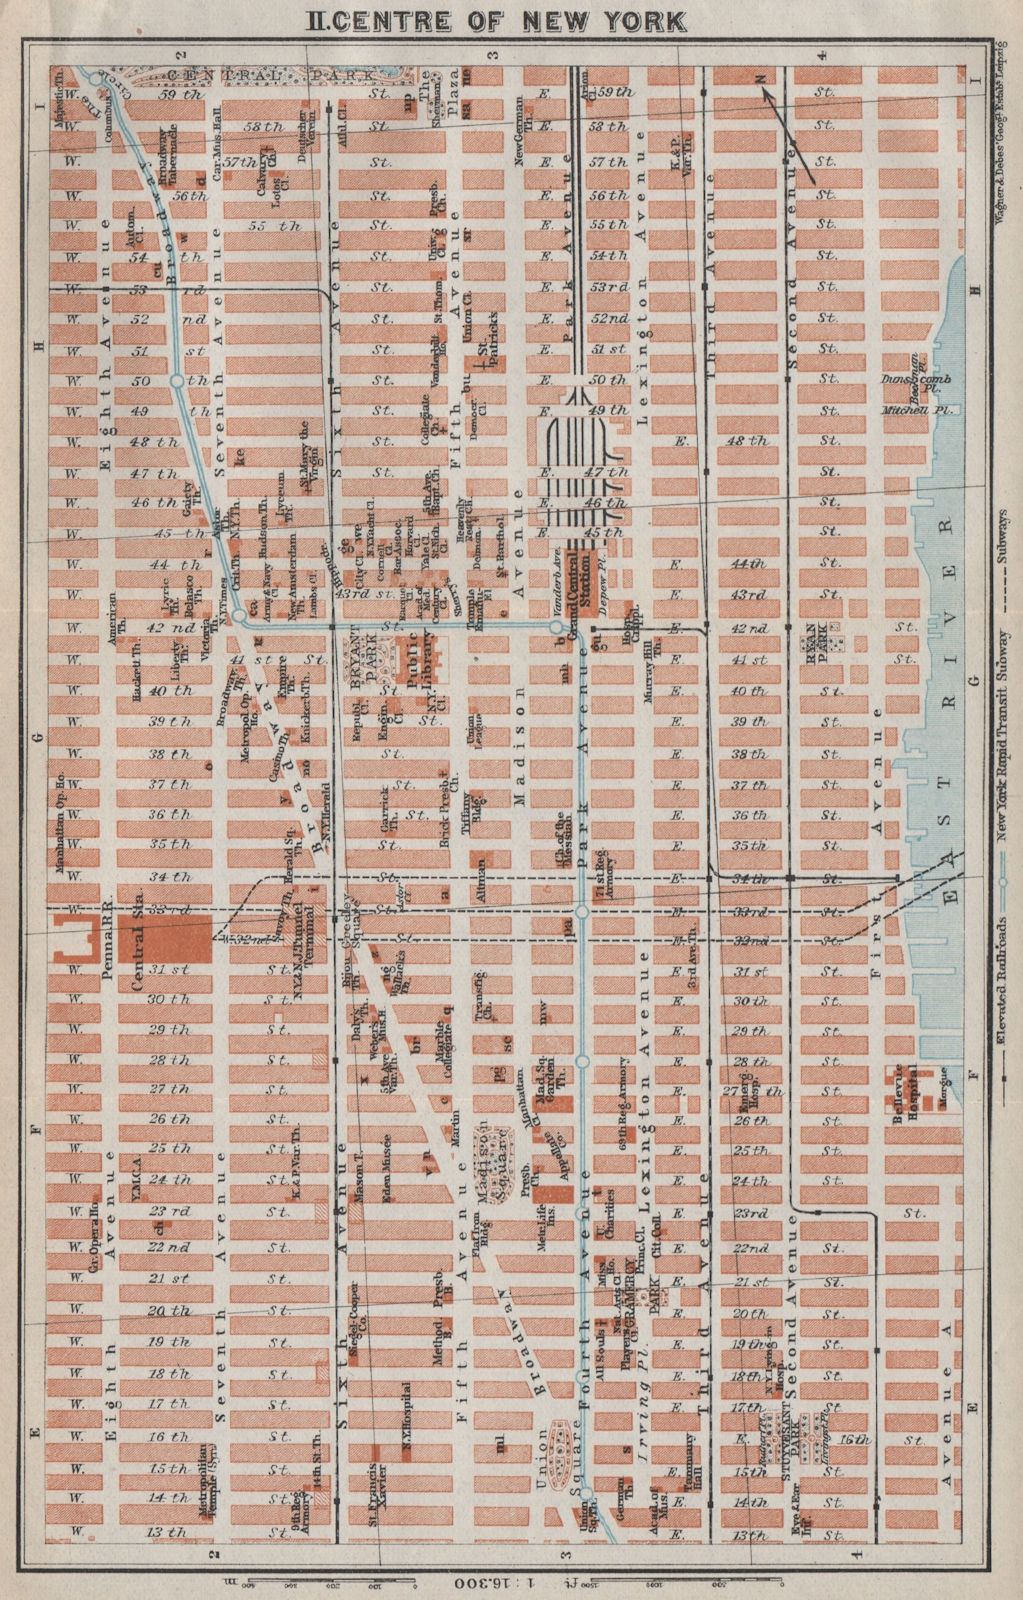 Associate Product MIDtown DOWNTOWN MANHATTAN. New York City antique town plan. BAEDEKER 1909 map